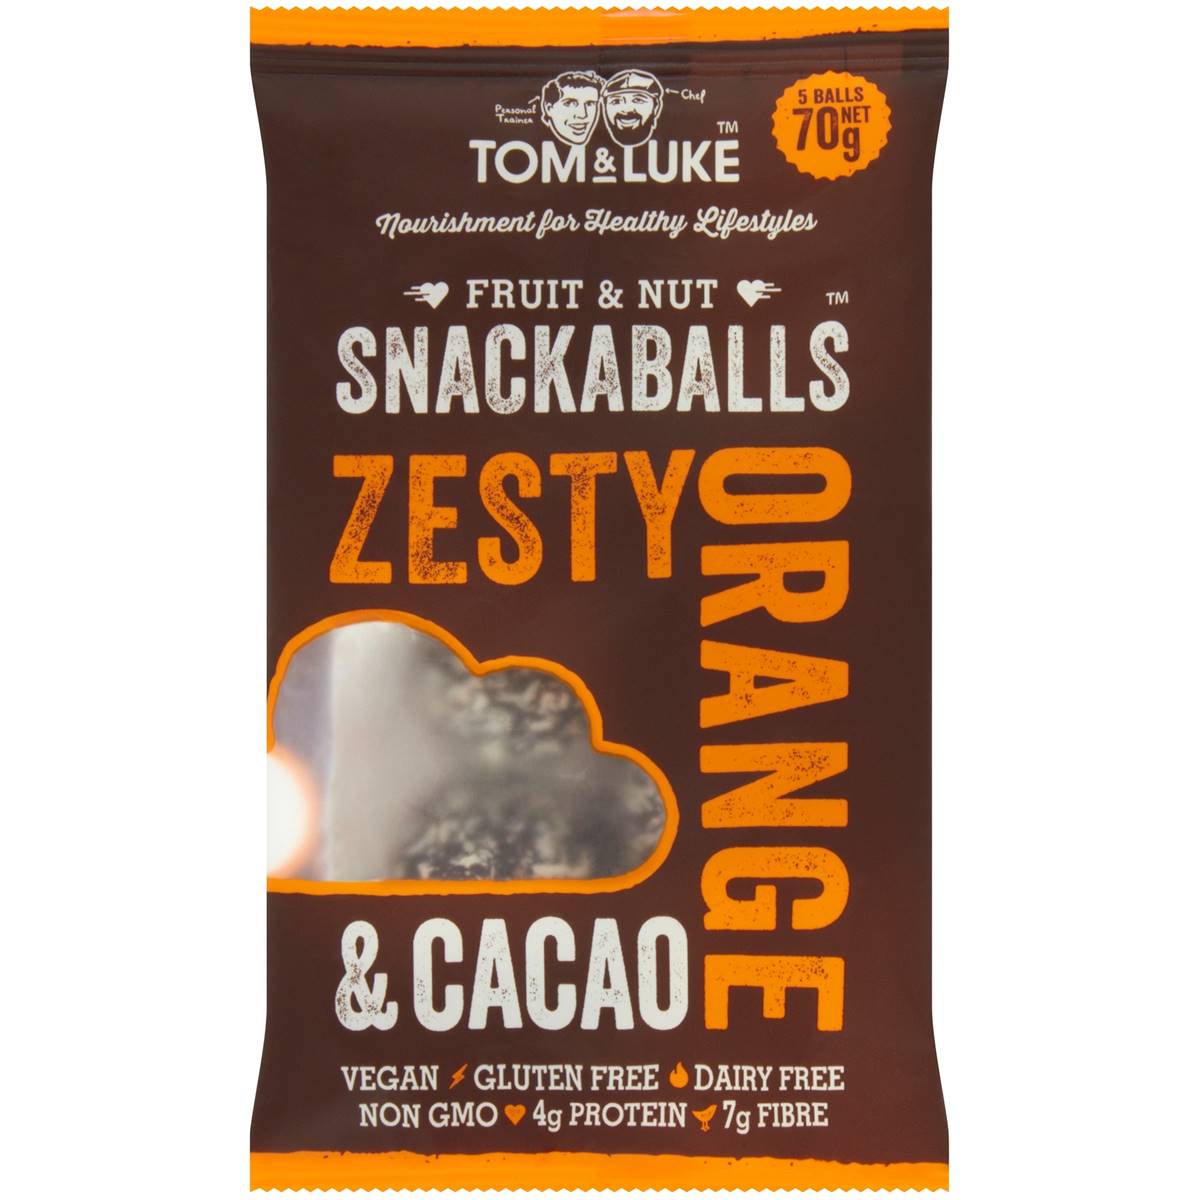 Calories in Tom & Luke Zesty Orange & Cacao Snackballs